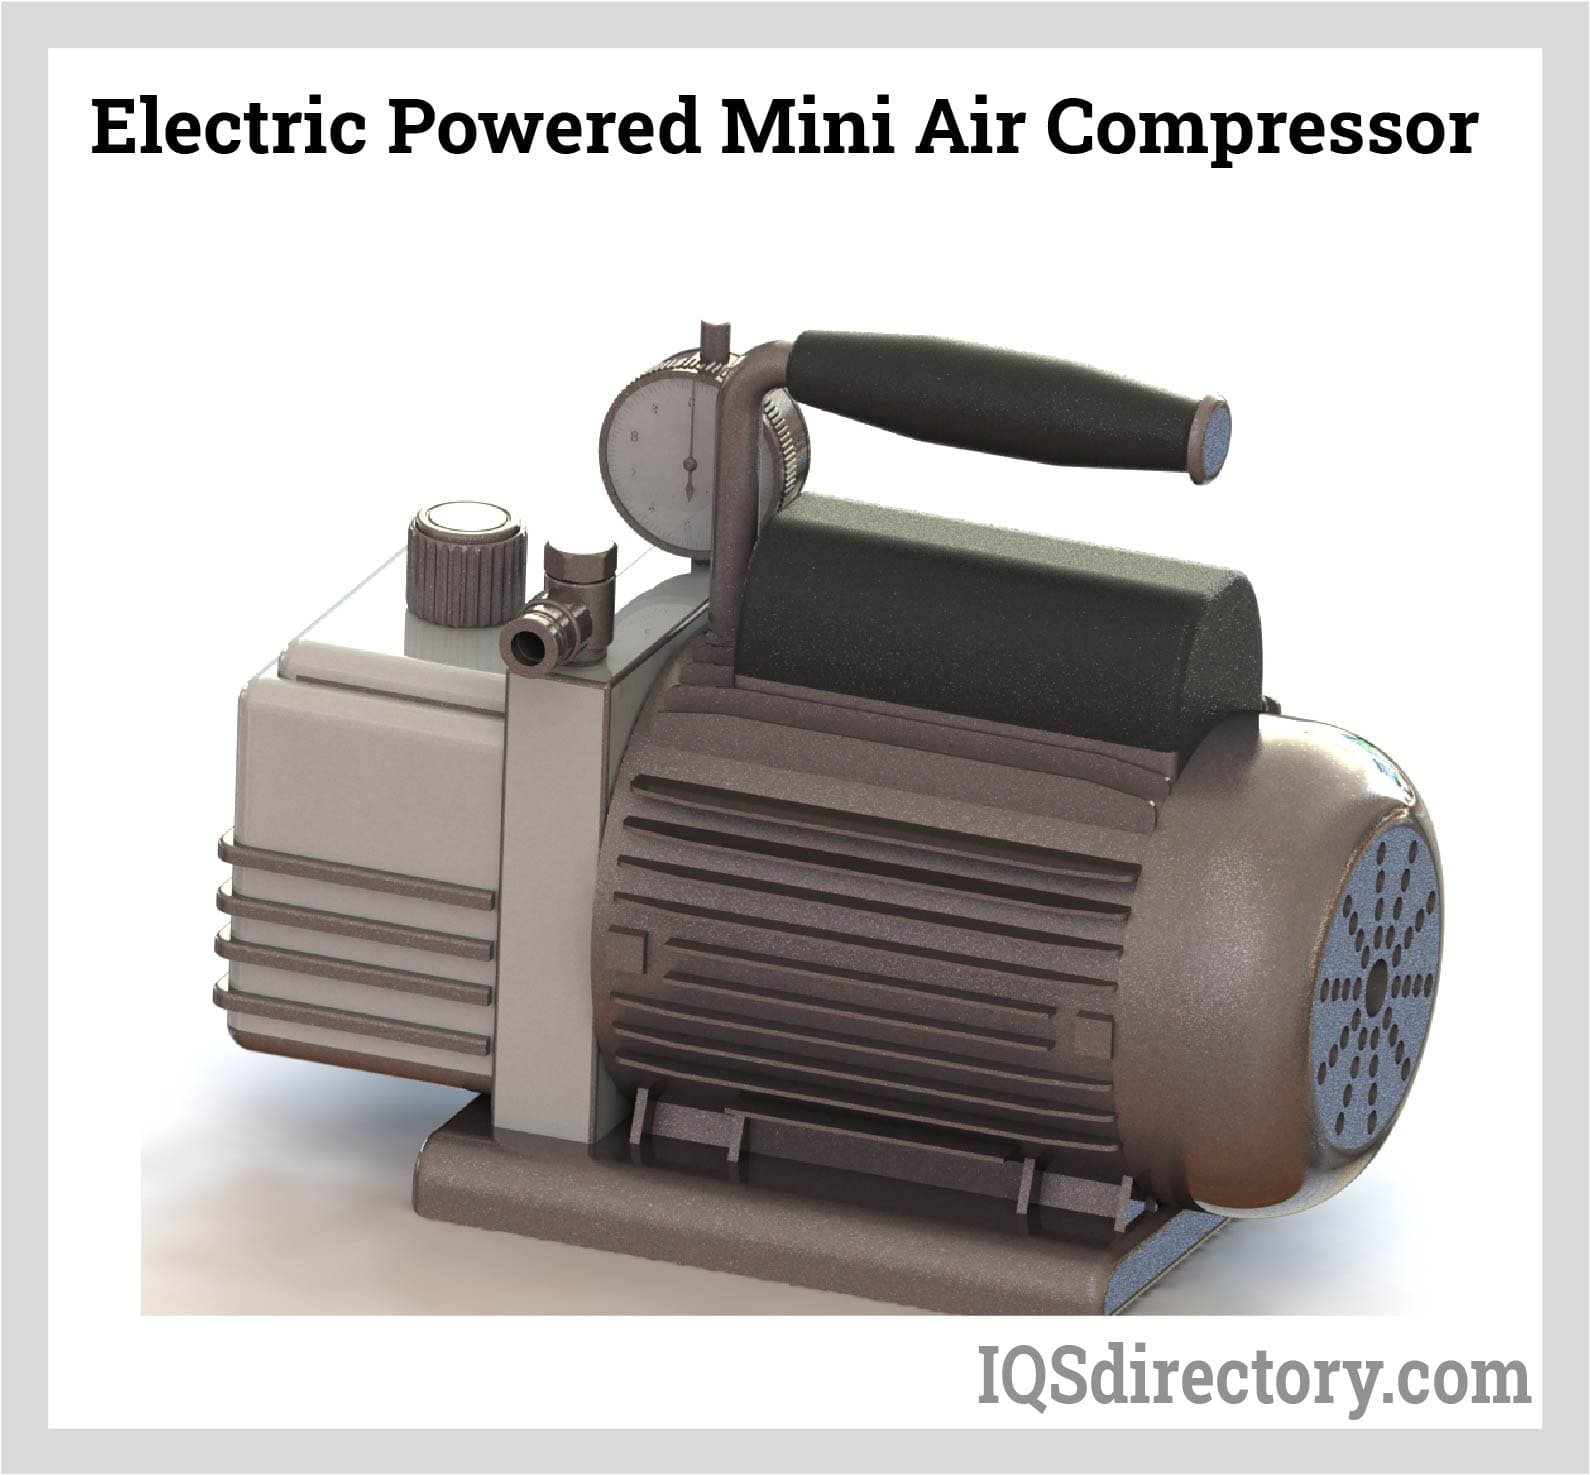 electric powered mini air compressor